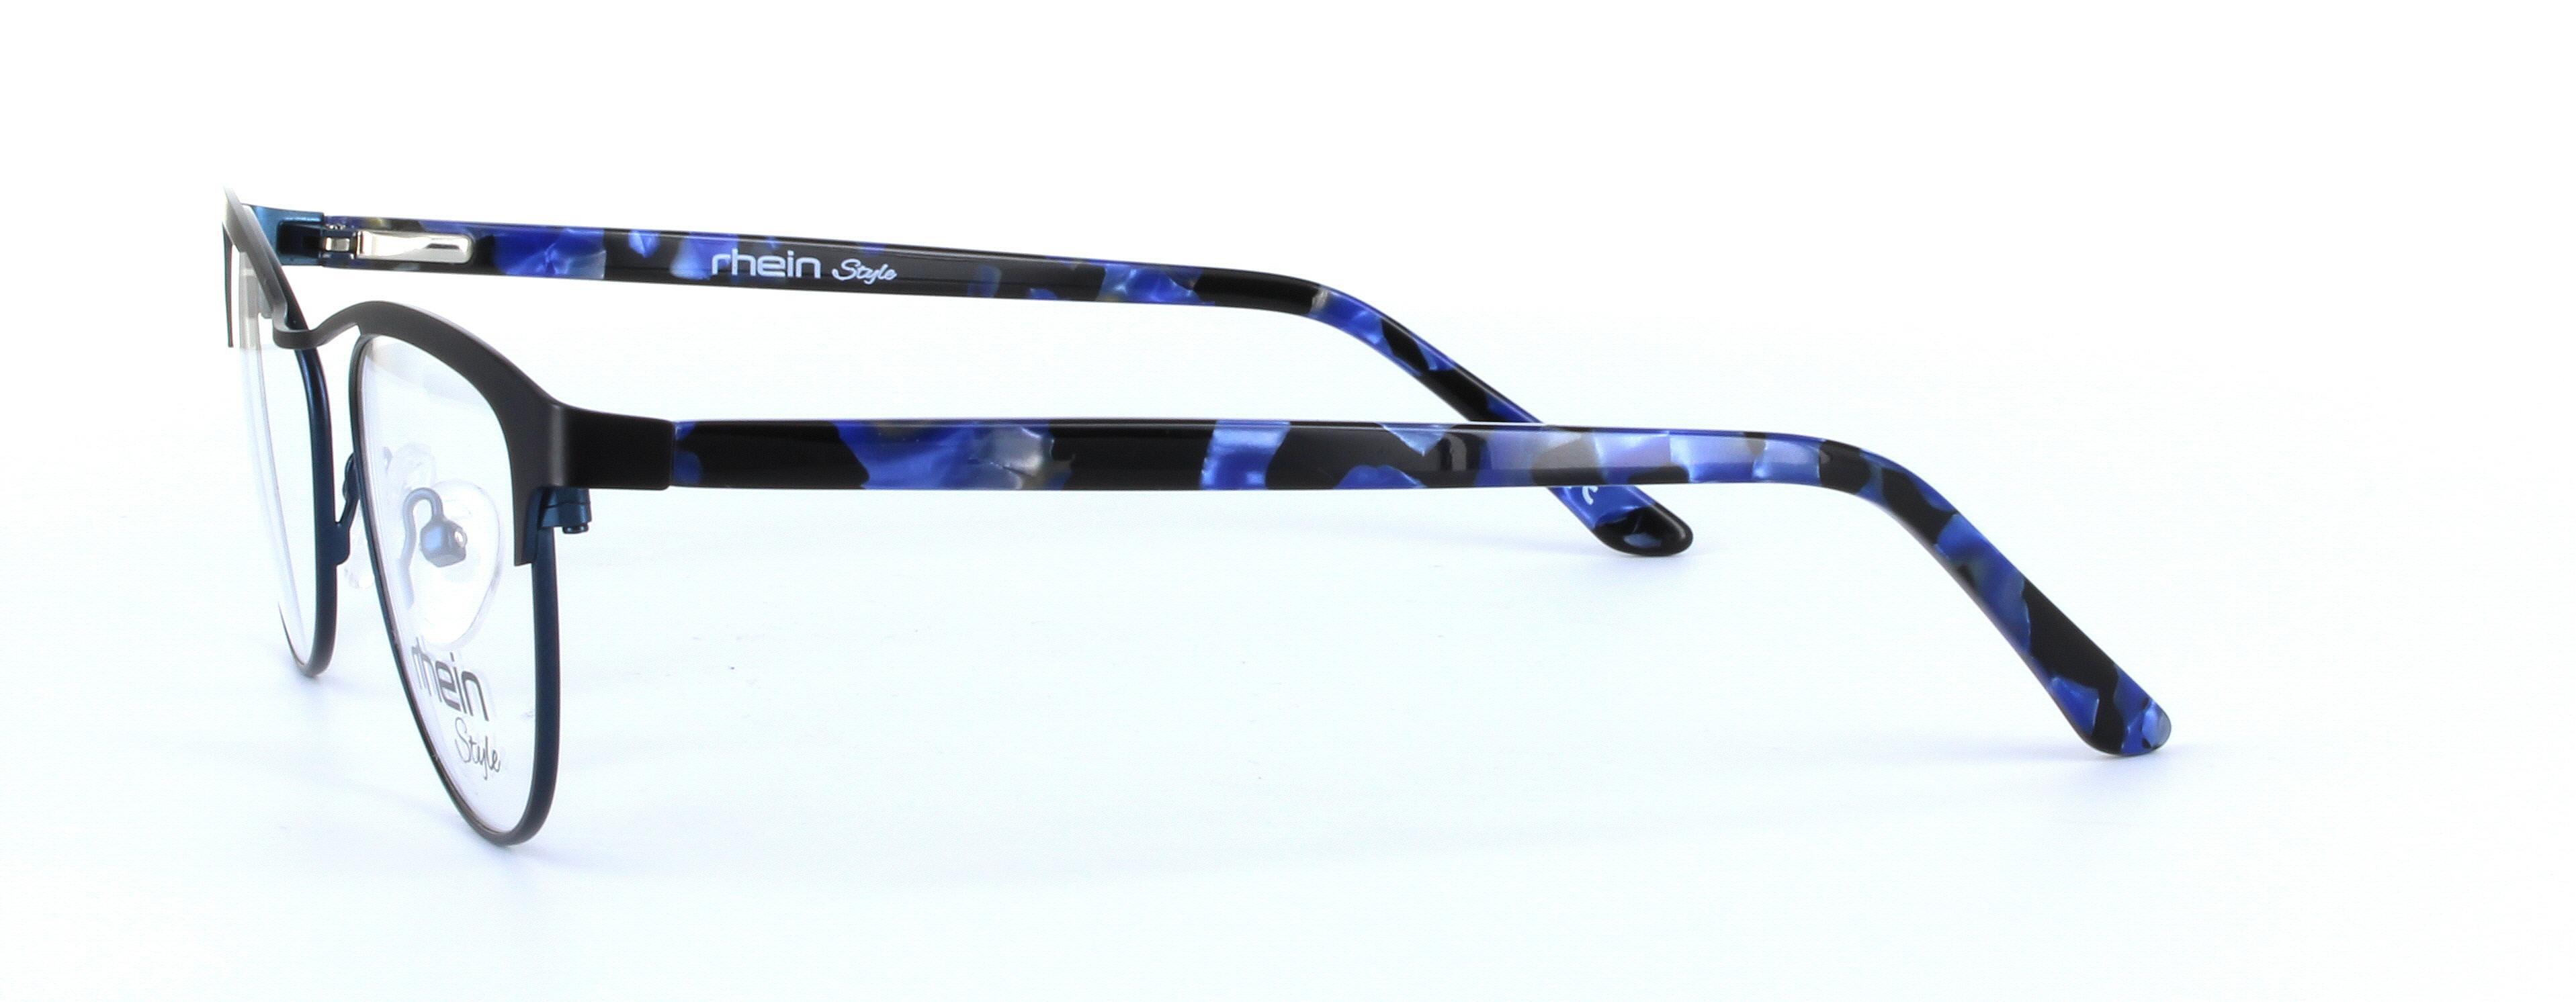 Bolla Gunmetal and Blue Full Rim Oval Metal Glasses - Image View 2